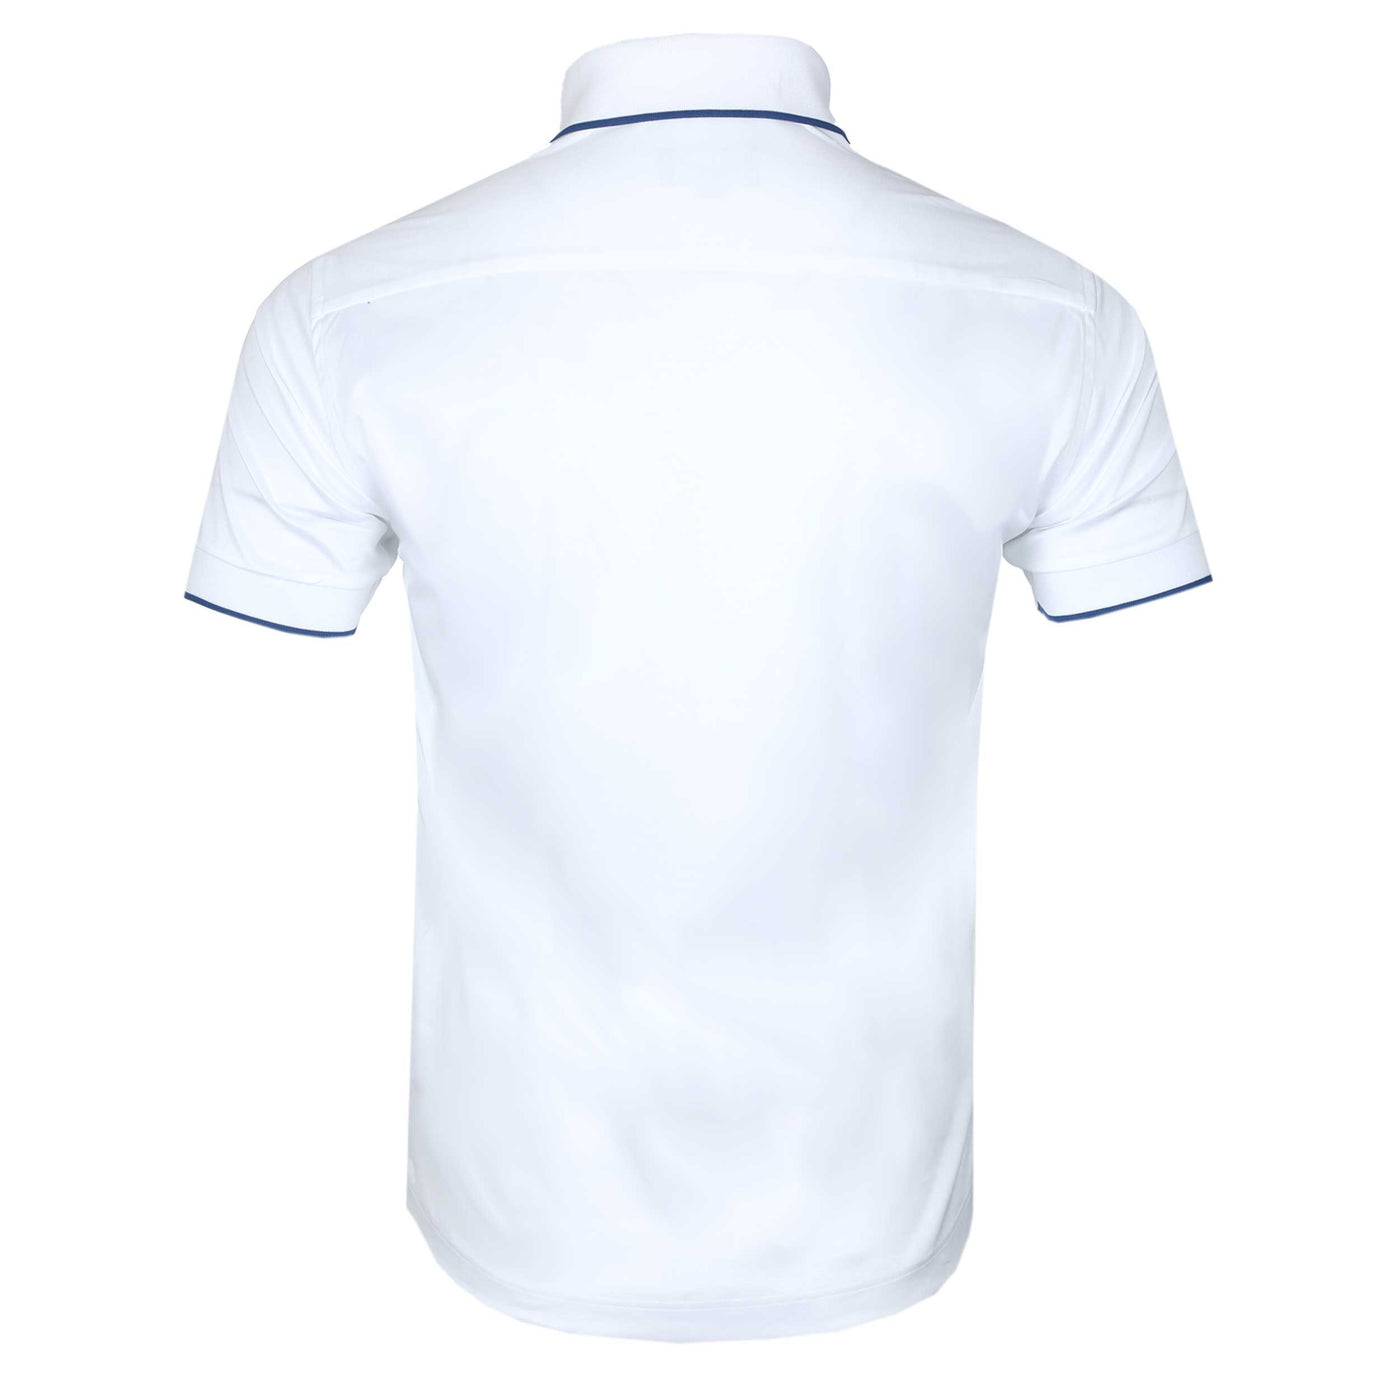 Eton Filo Di Scozia Polo Shirt in White Back